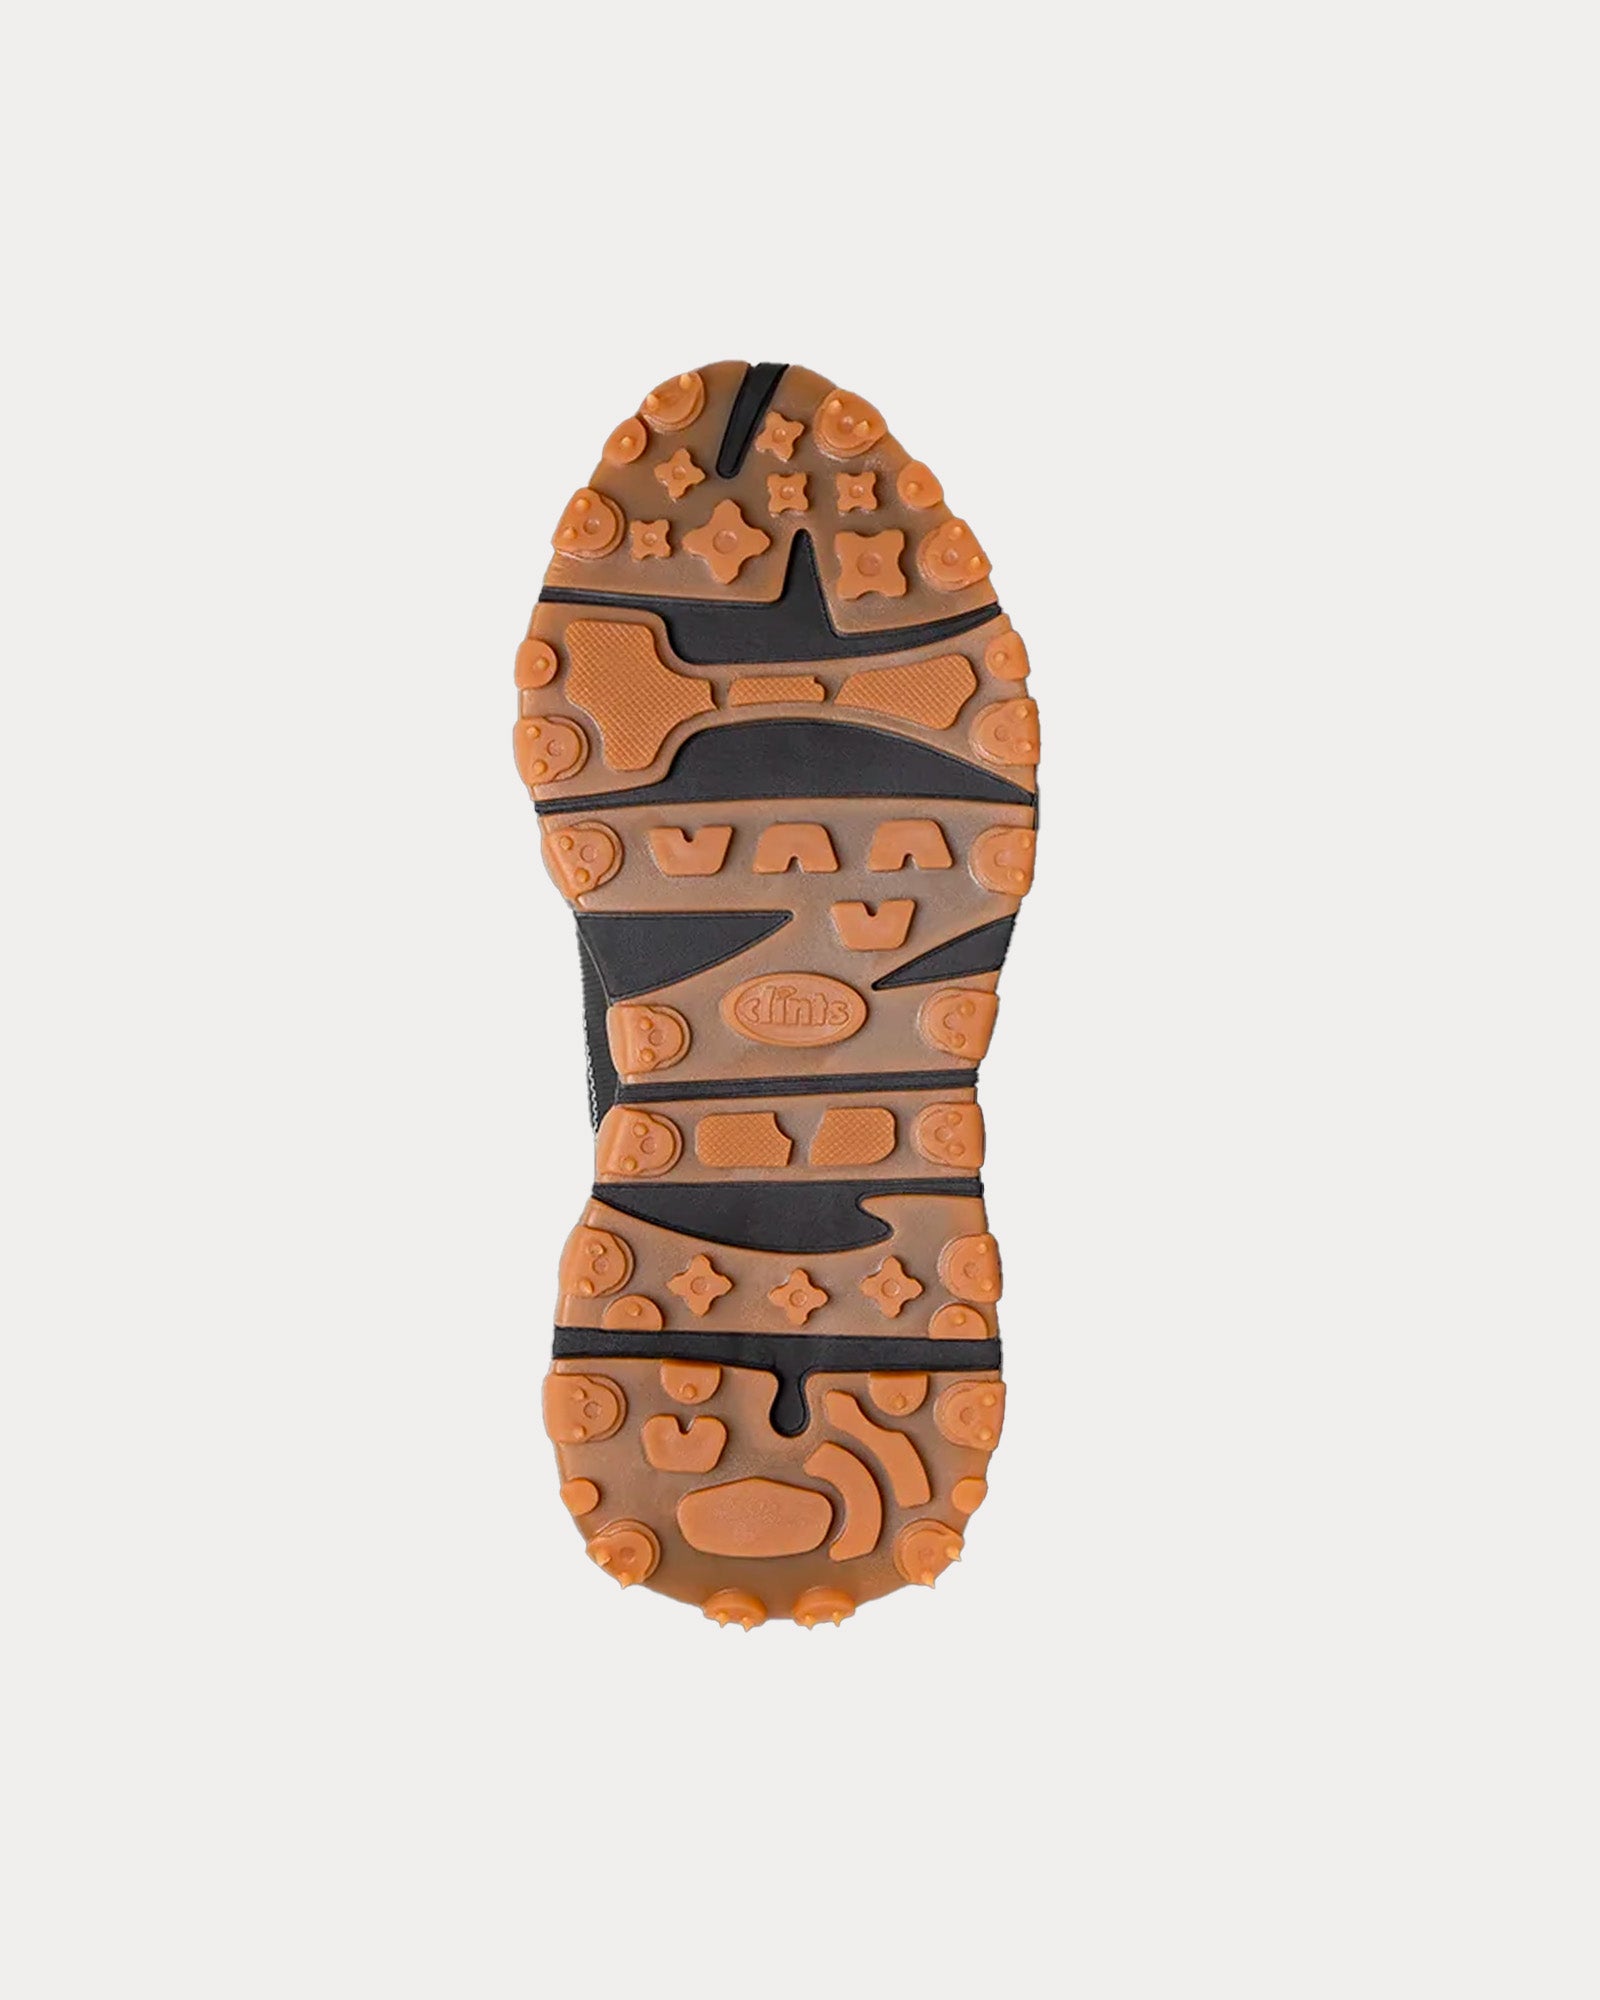 Clints Inc - TRL Footprints 2.0 Gum Black Low Top Sneakers